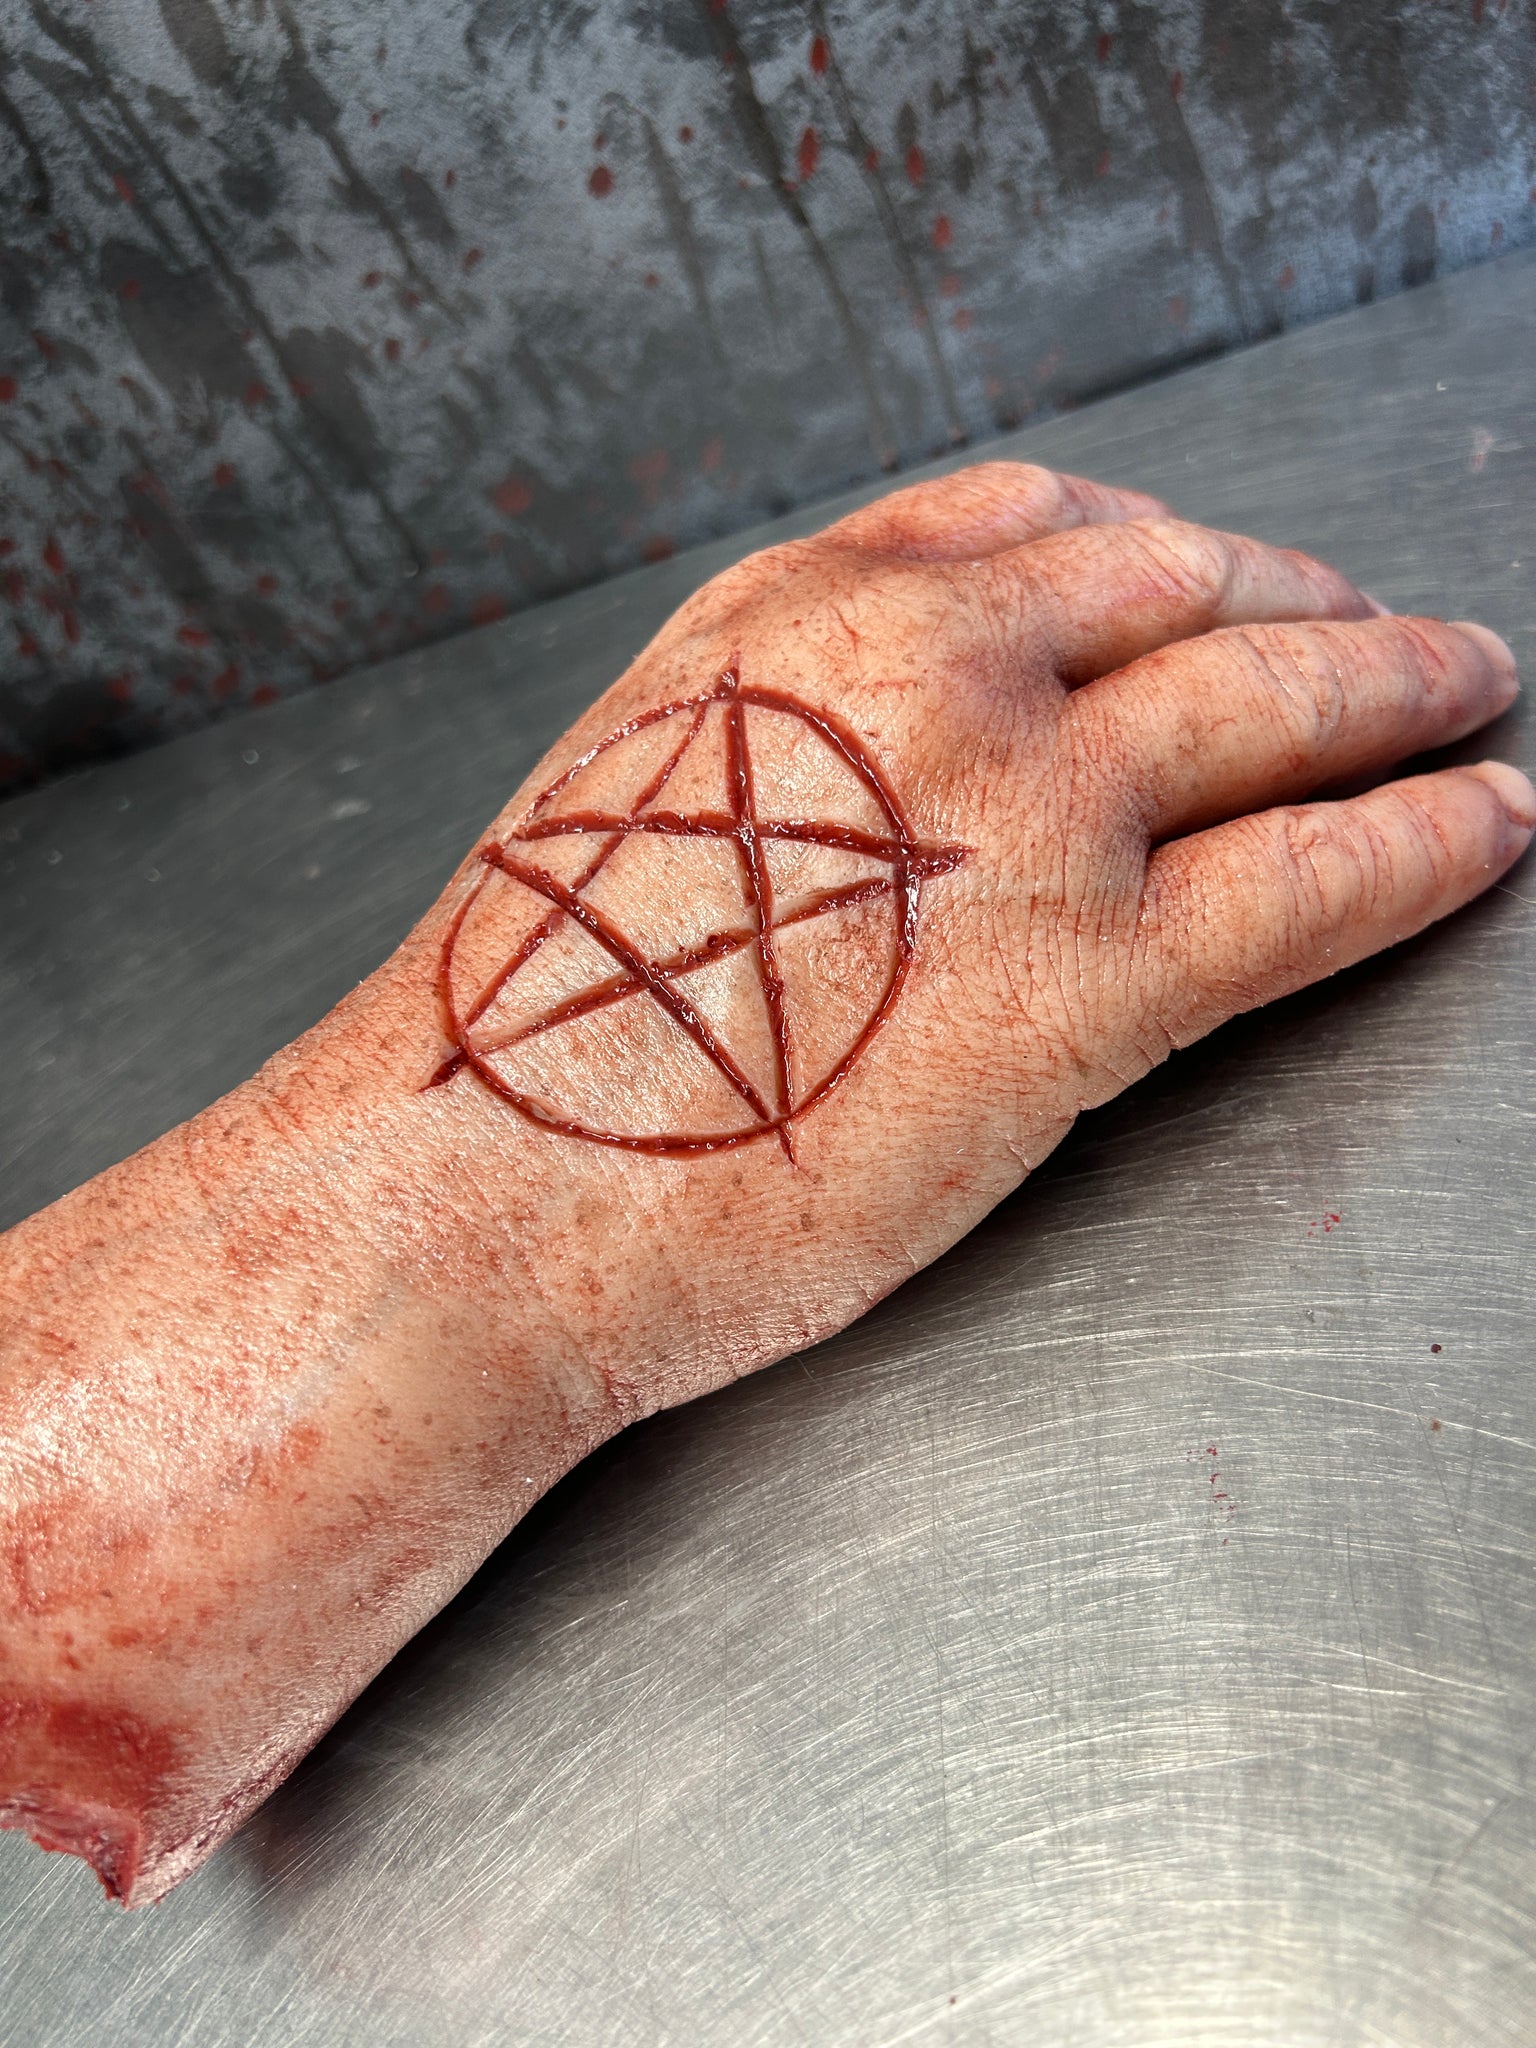 101 Amazing Pentagram Tattoo Ideas That Will Blow Your Mind! | Pentagram  tattoo, Pentacle tattoo, Pagan tattoo